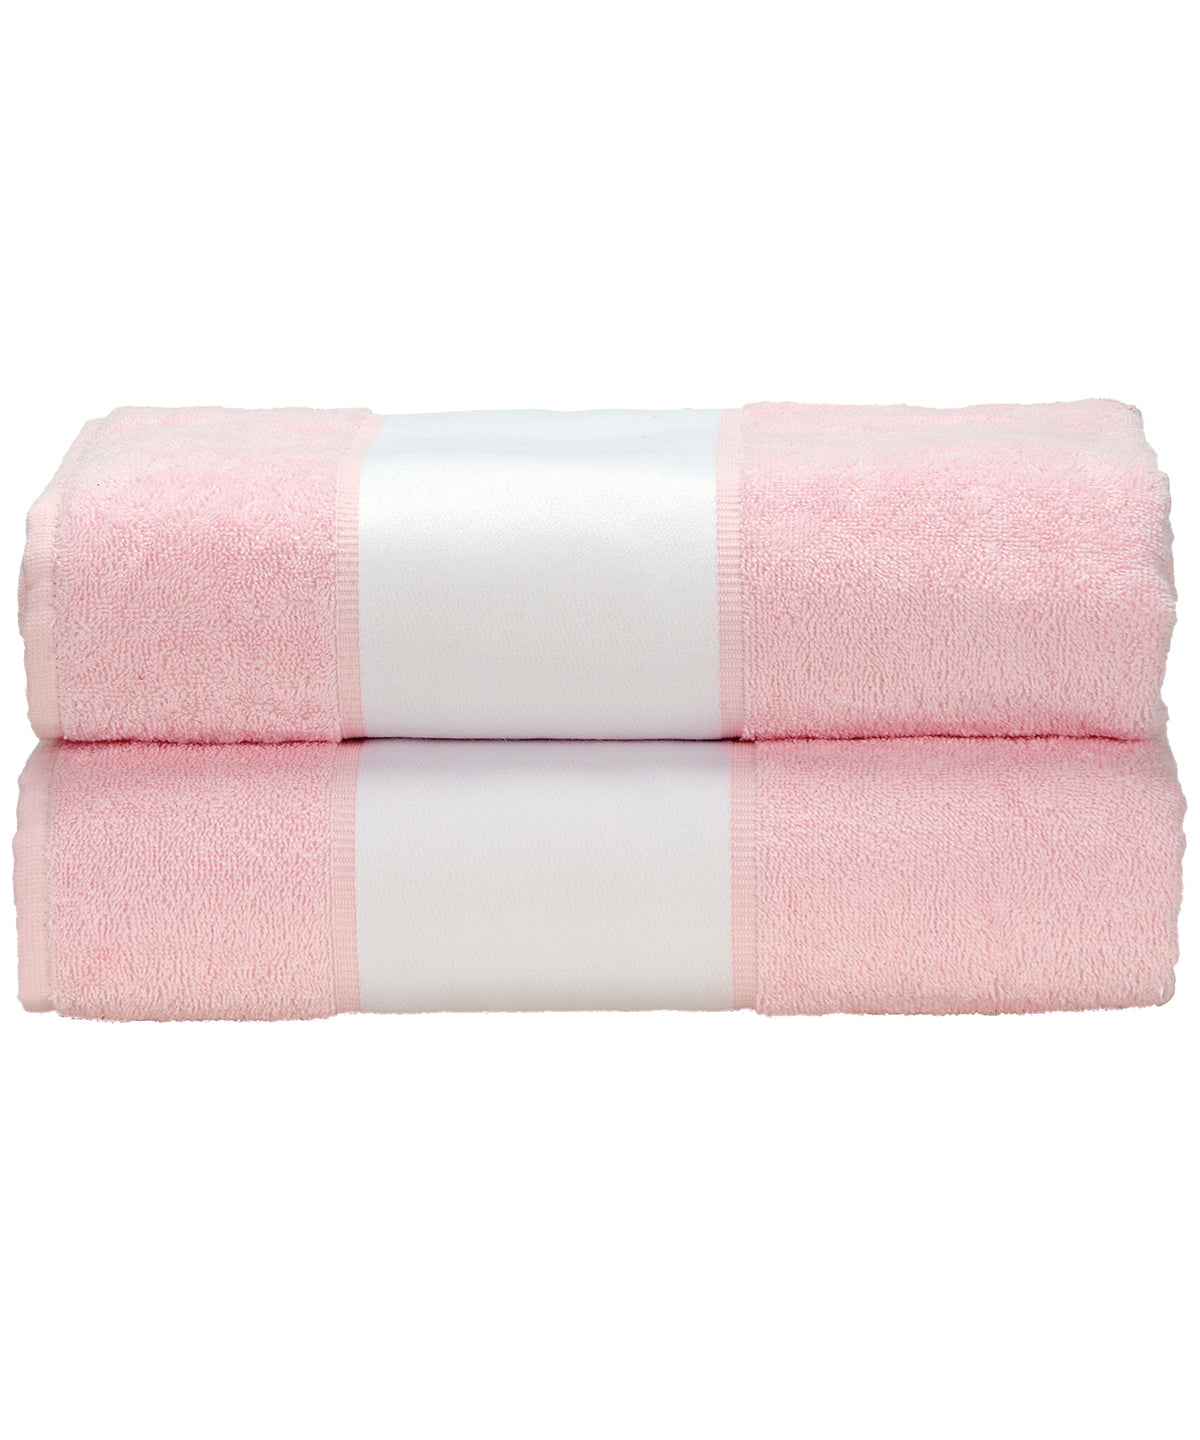 Personalised Towels - Light Pink A&R Towels ARTG® SUBLI-Me® bath towel